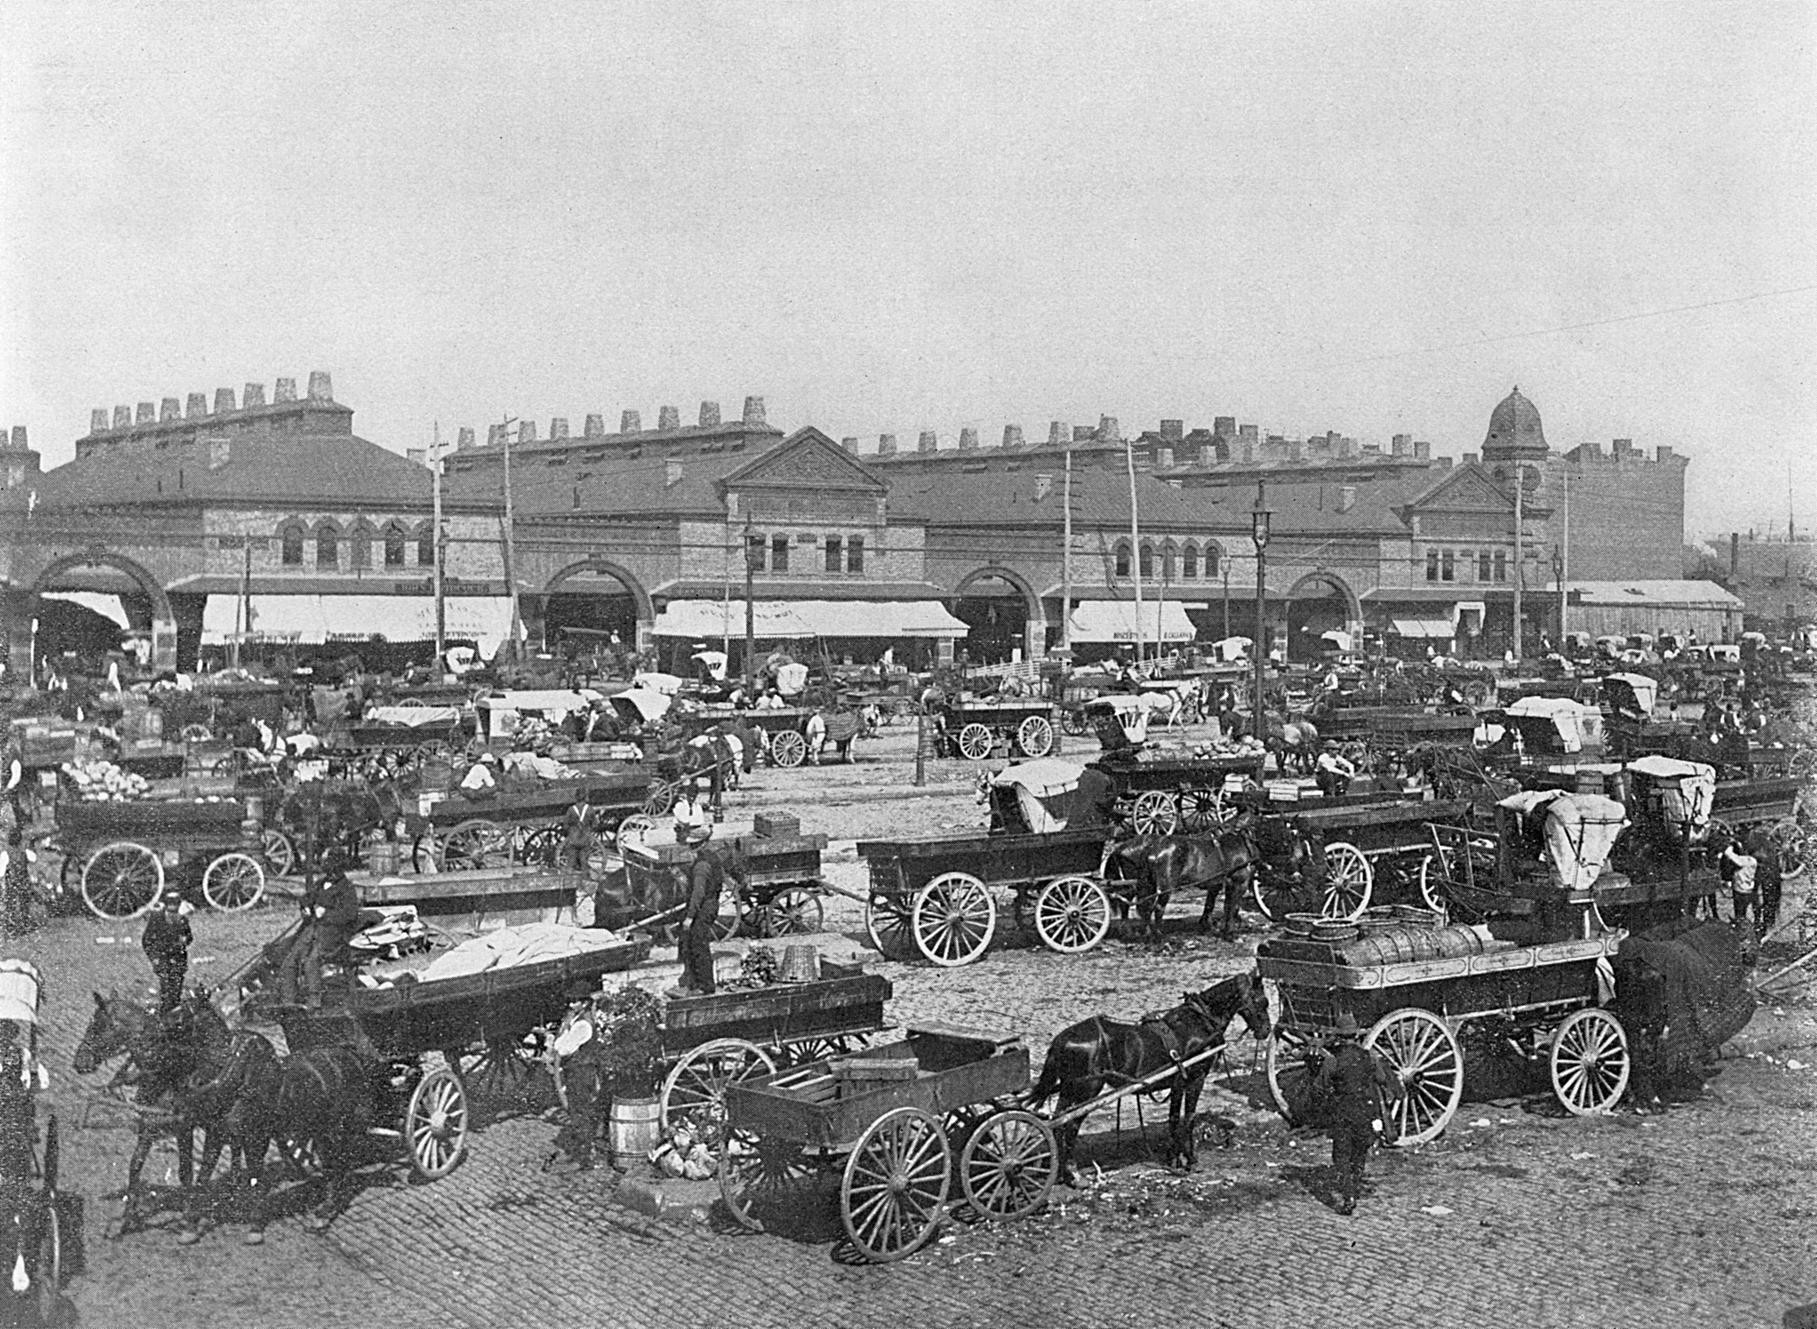 West Washington Market, New York City, USA, with horses, carts and traders.